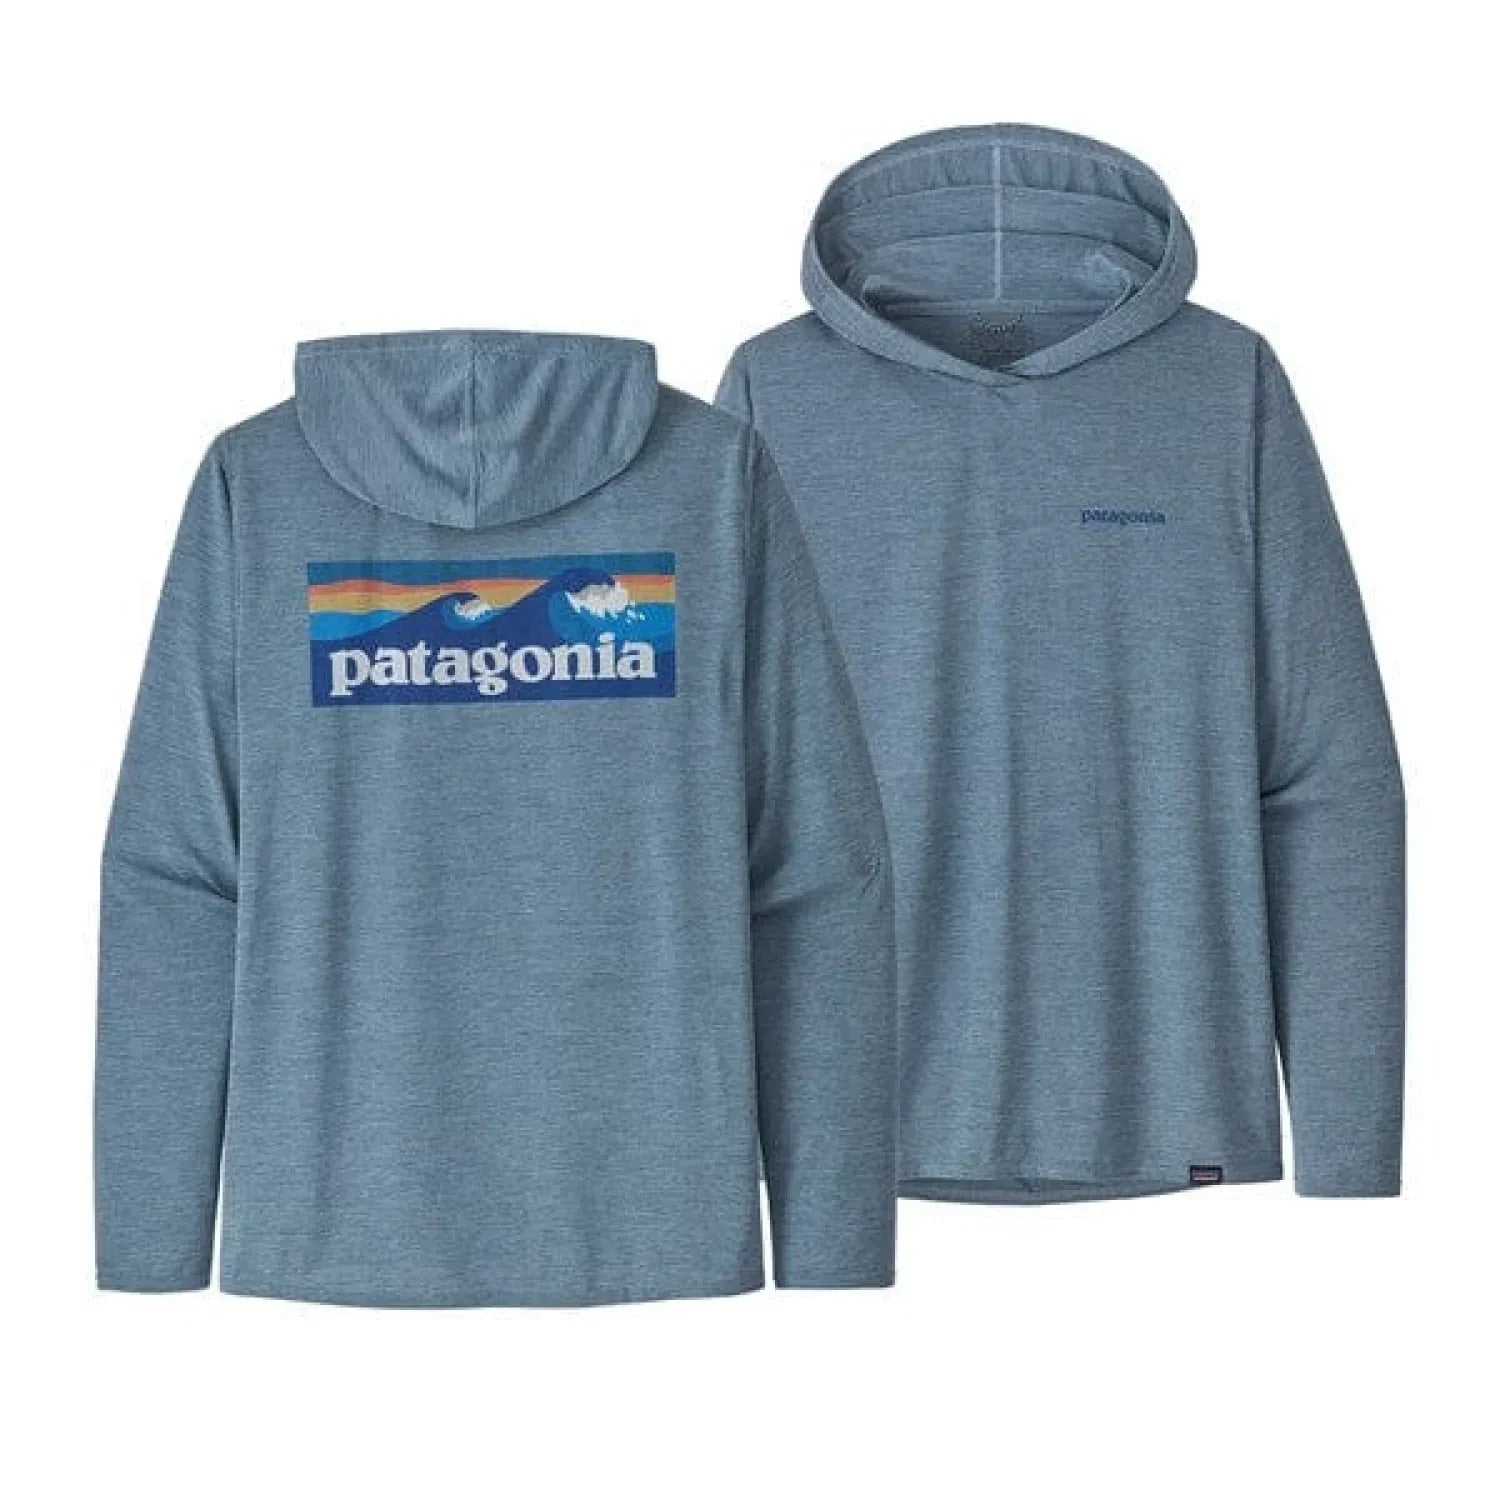 Patagonia 05. M. SPORTSWEAR - M. LS SHIRTS Men's Capilene Cool Daily Graphic Hoody BOARDSHORT LOGO| LIGHT PLUME GREY X-DYE